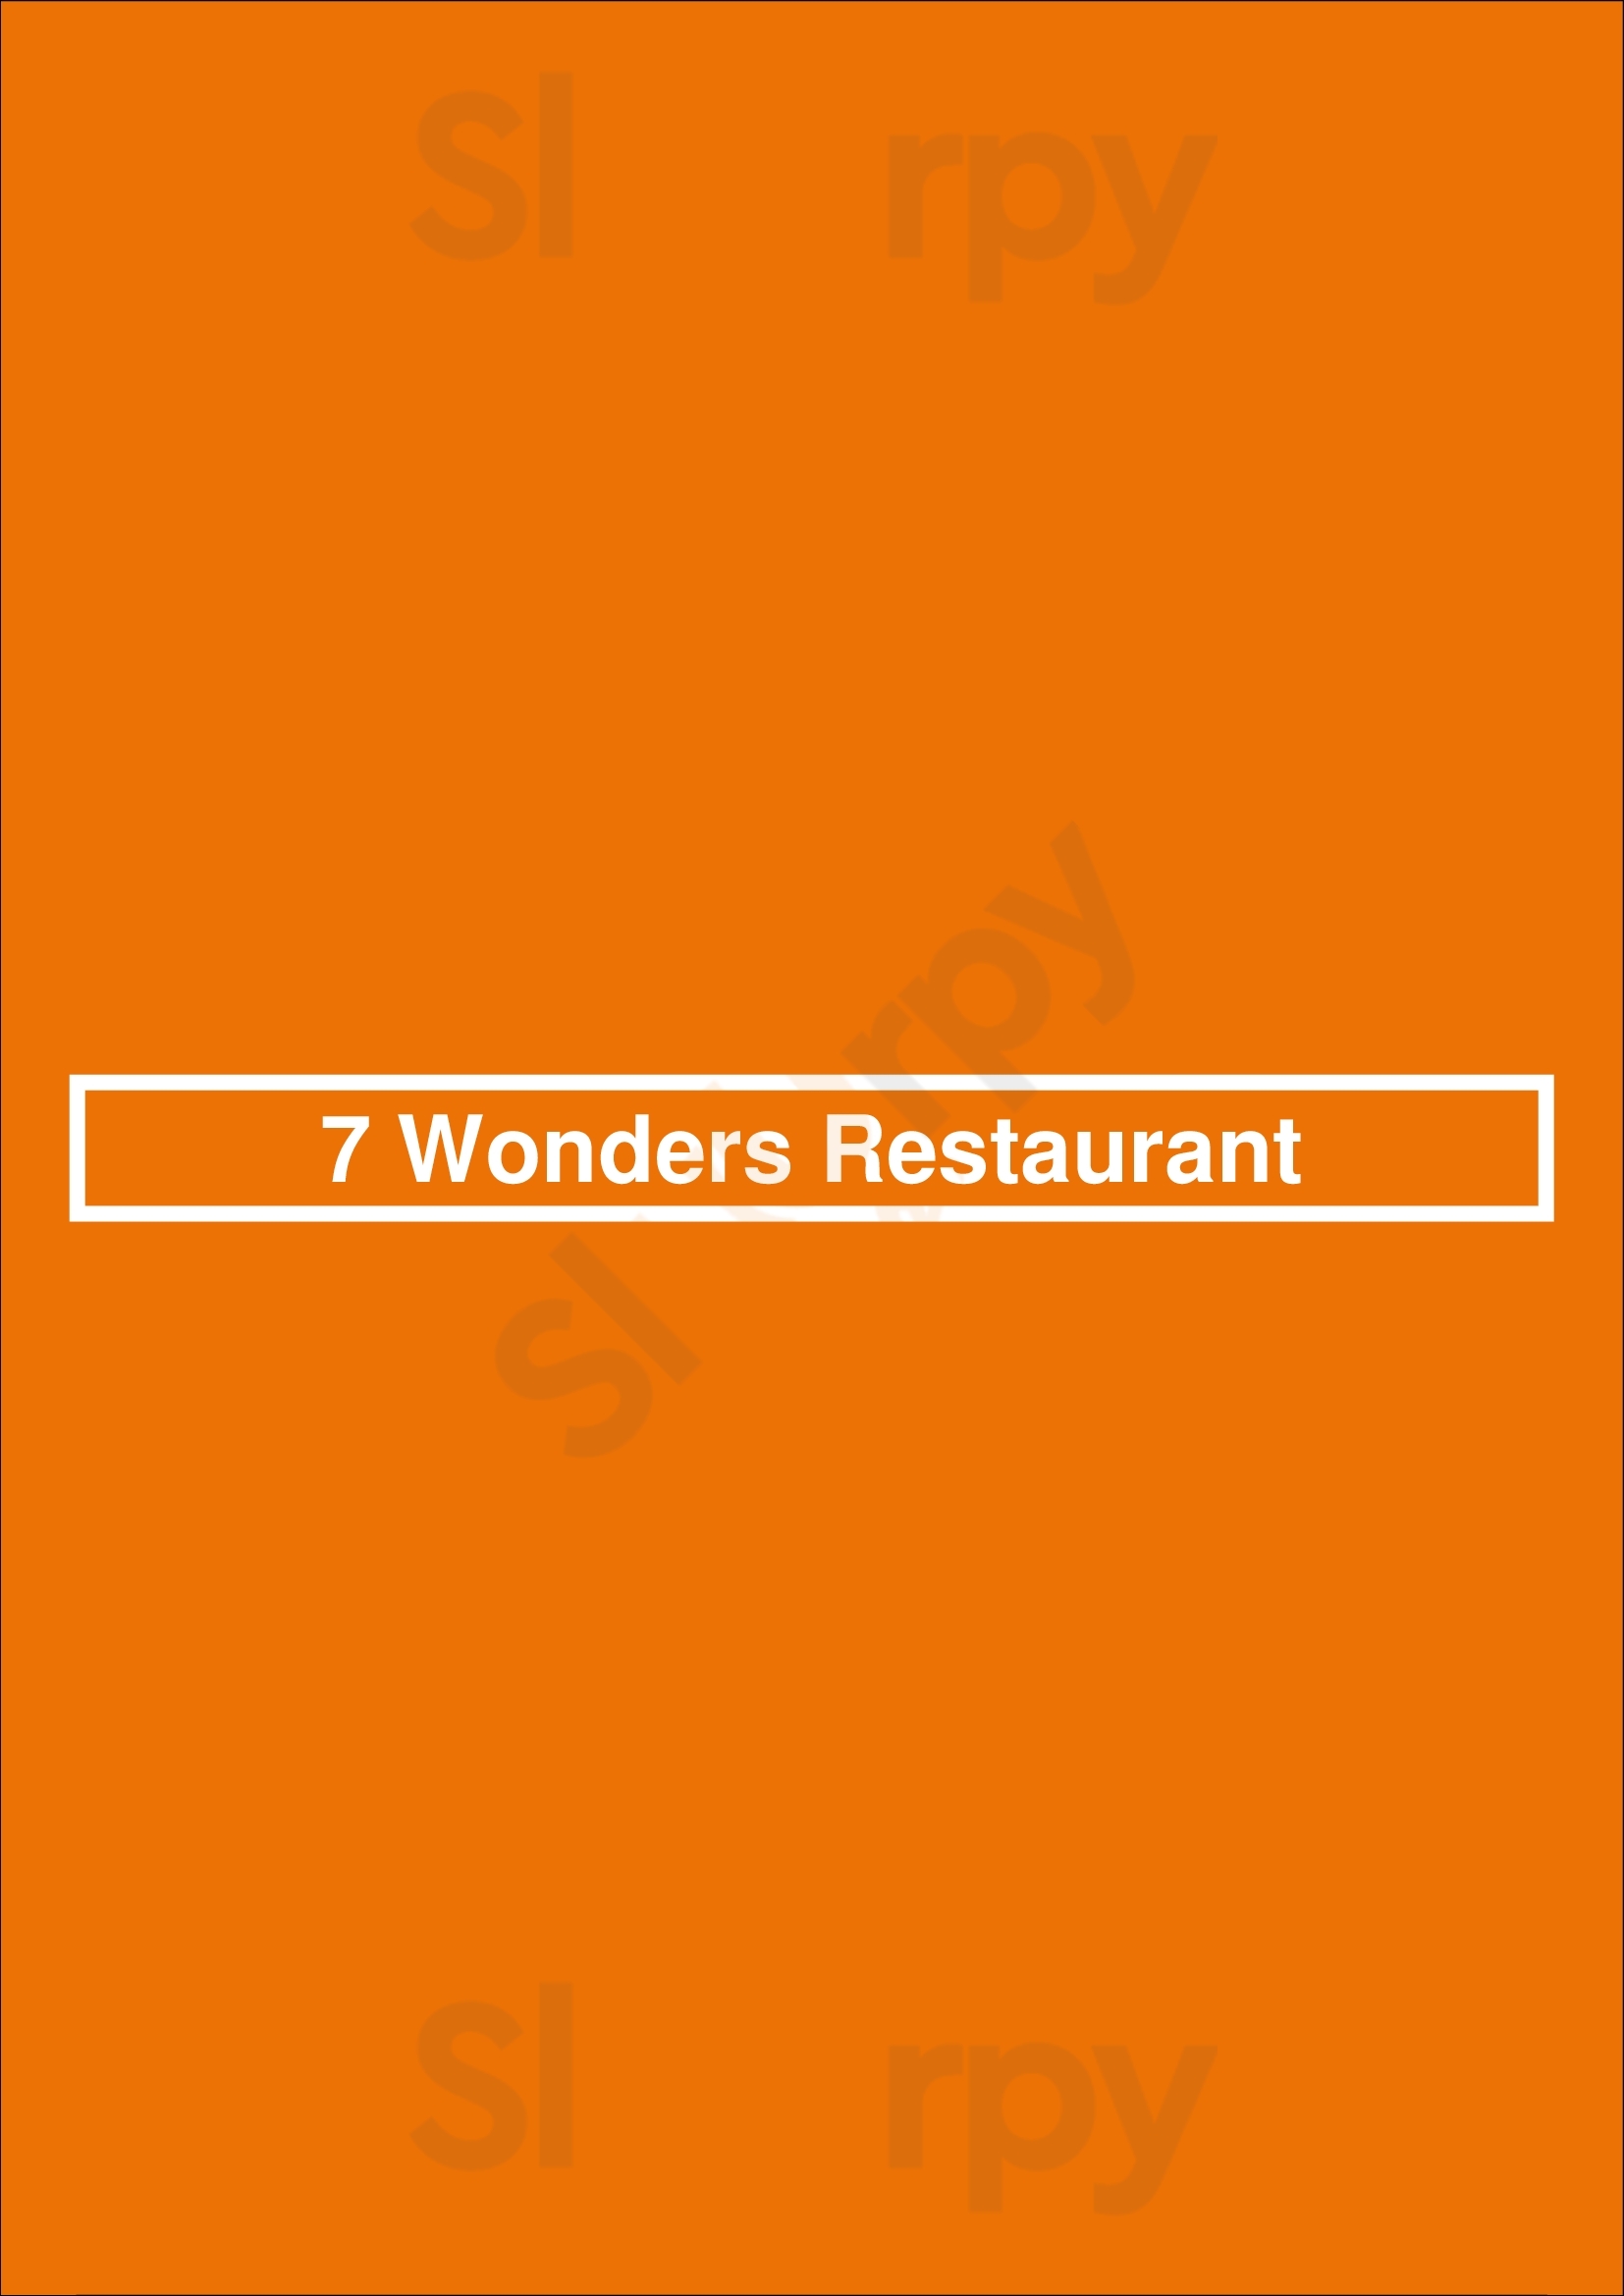 7 Wonders Restaurant Jacksonville Menu - 1